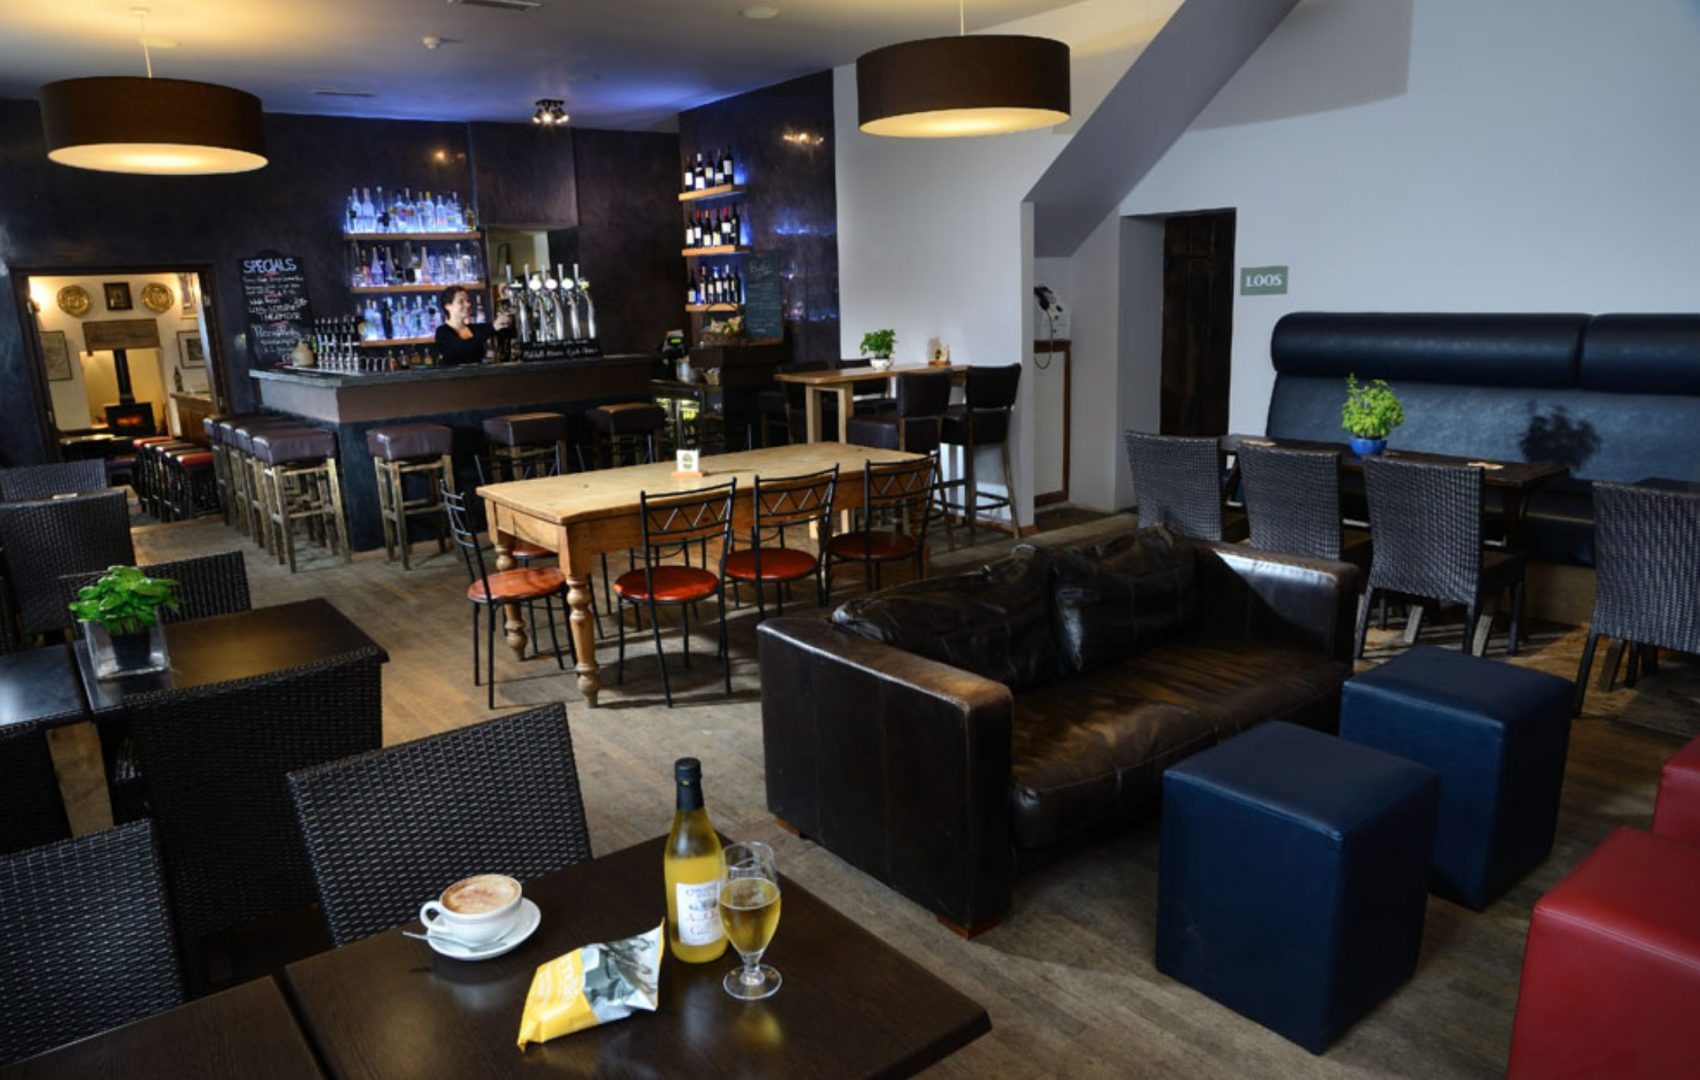 Woolpack Inn – Hardknott Bar & Cafe